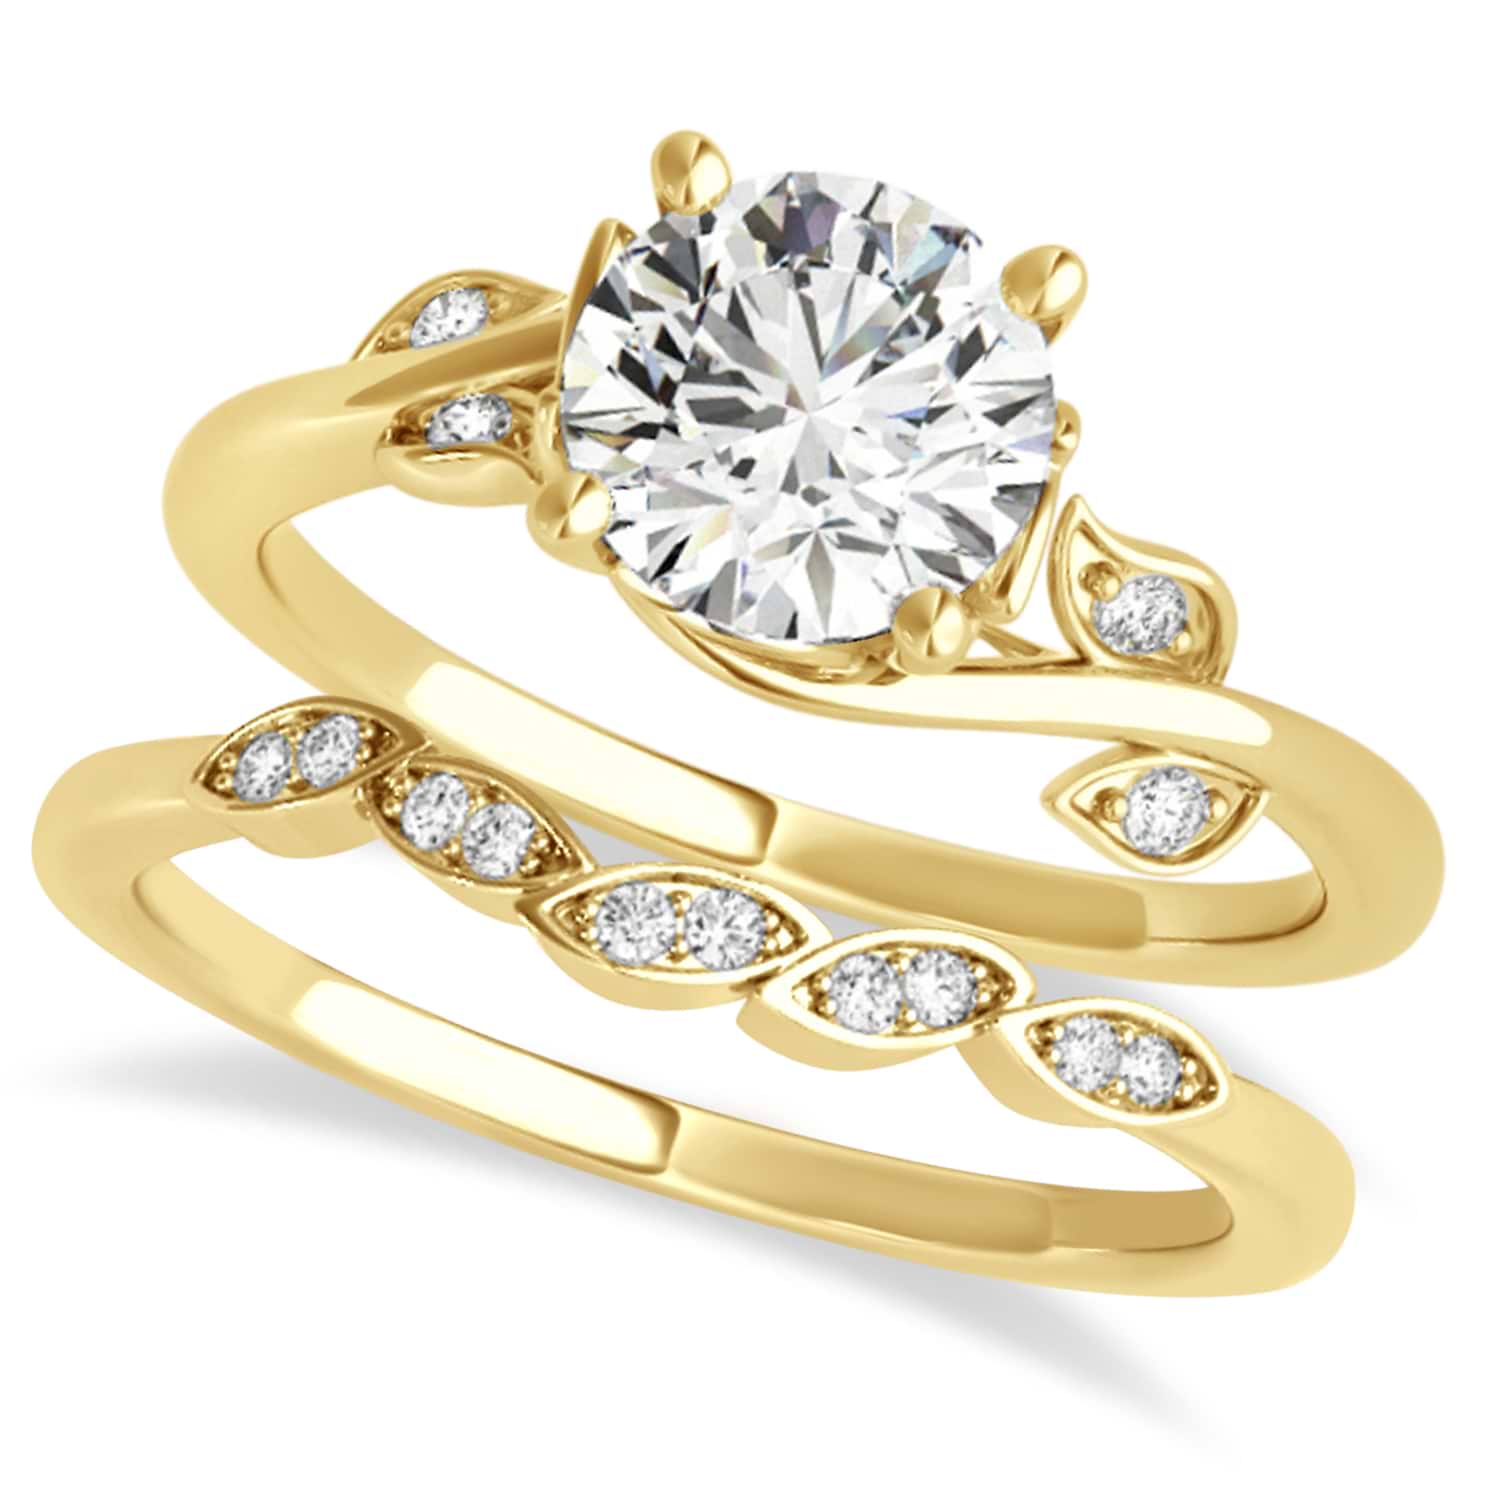 Bypass Floral Diamond Bridal Set Setting 14k Yellow Gold (1.05ct)